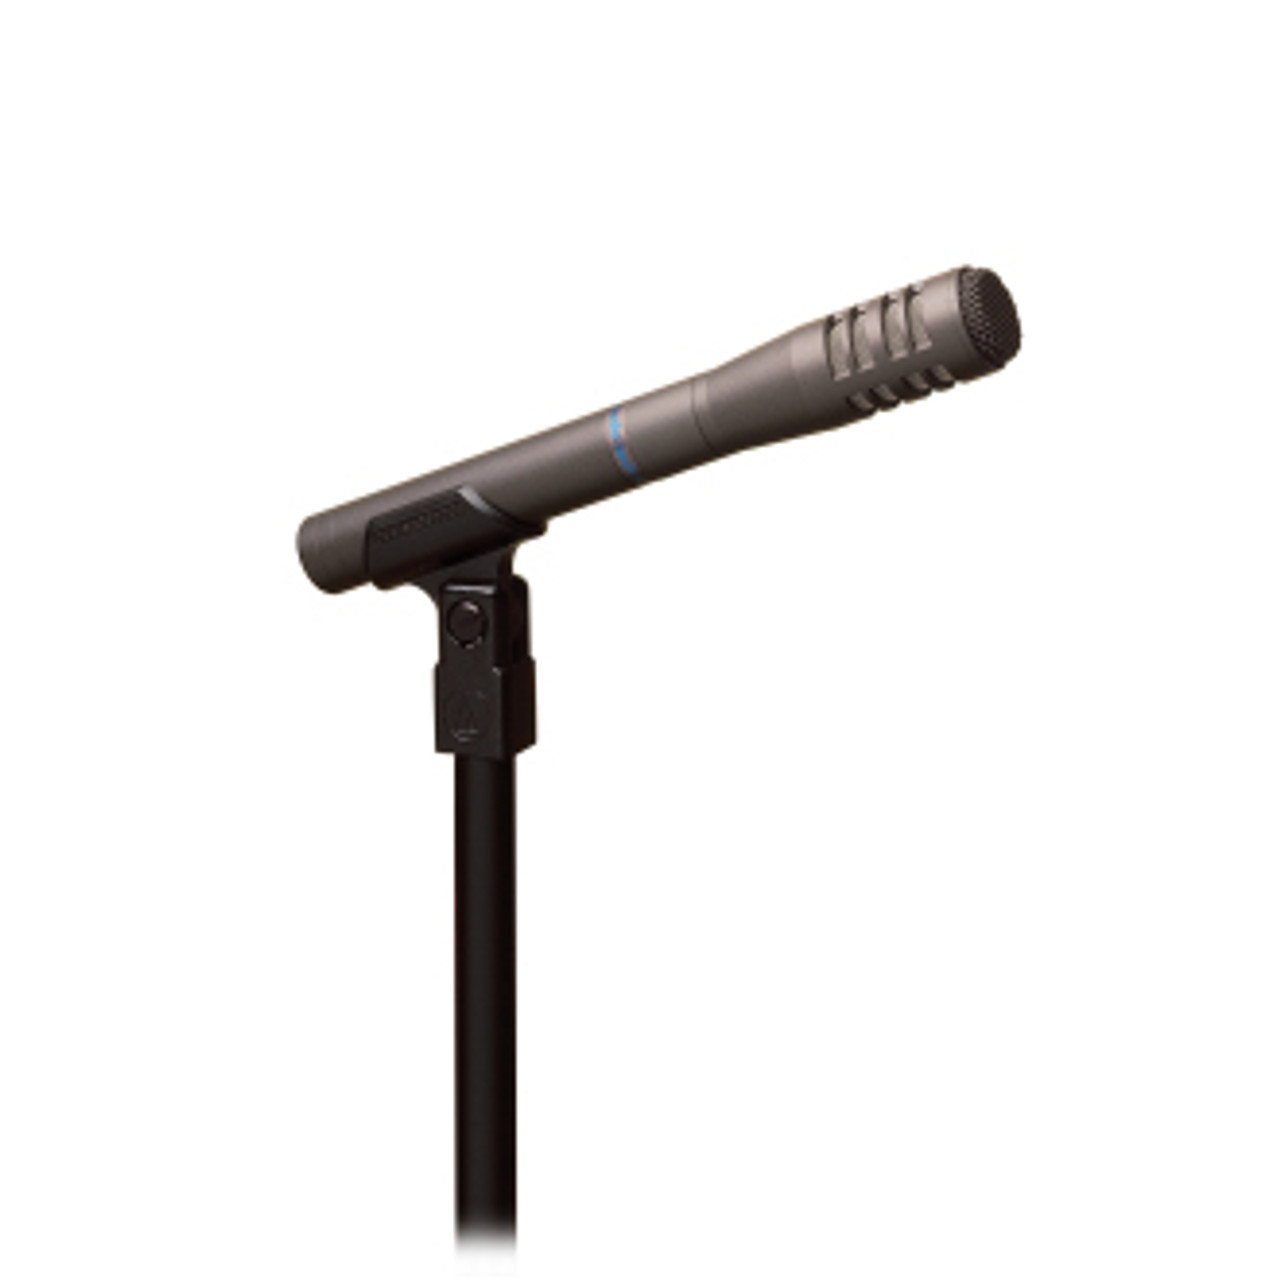 AT4033aCardioid Condenser Microphone